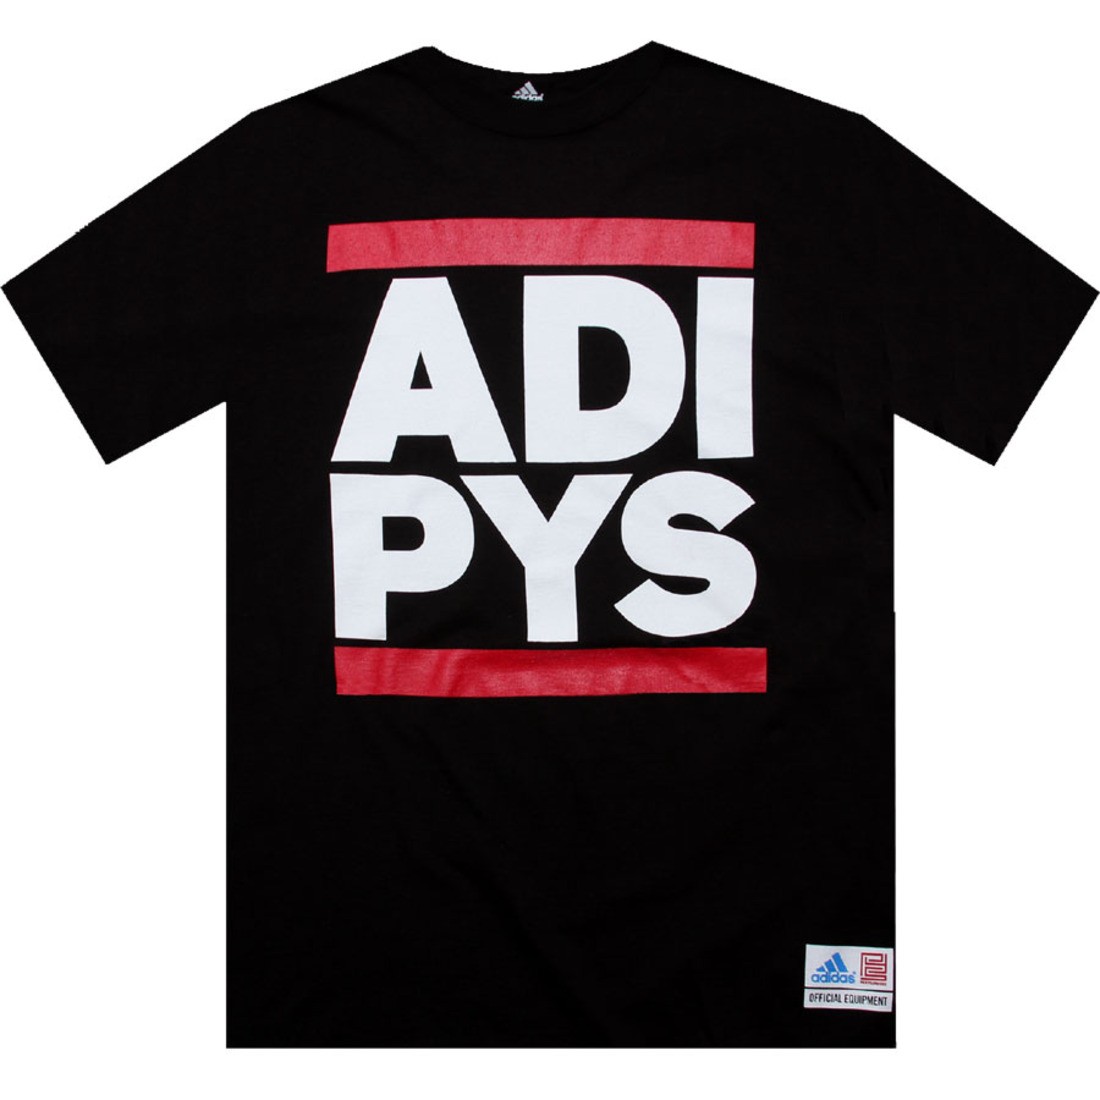 Adidas PYS DMC Adi Tee shirt style (black) Run